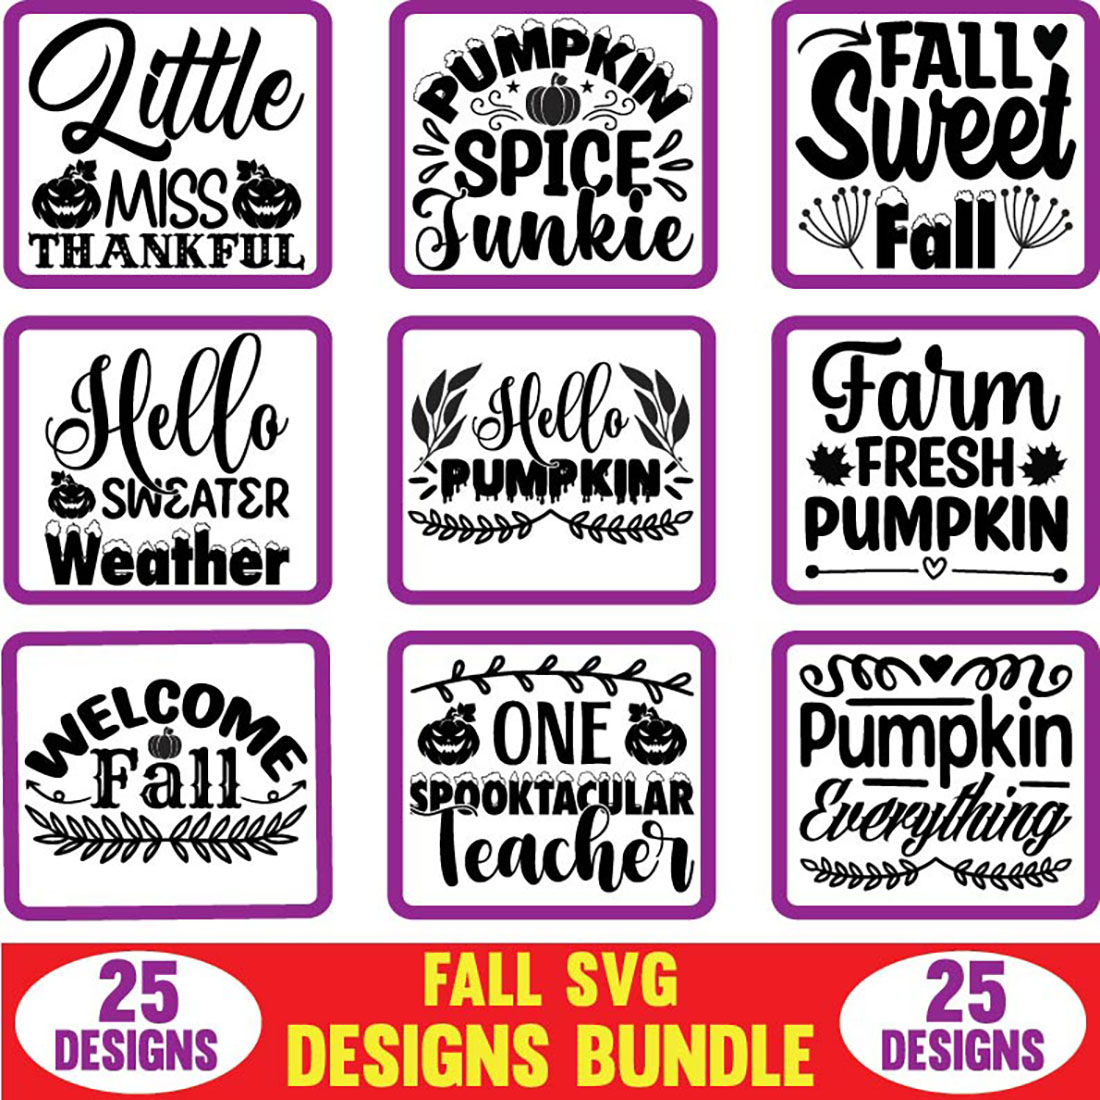 Fall SVG Designs Bundle cover